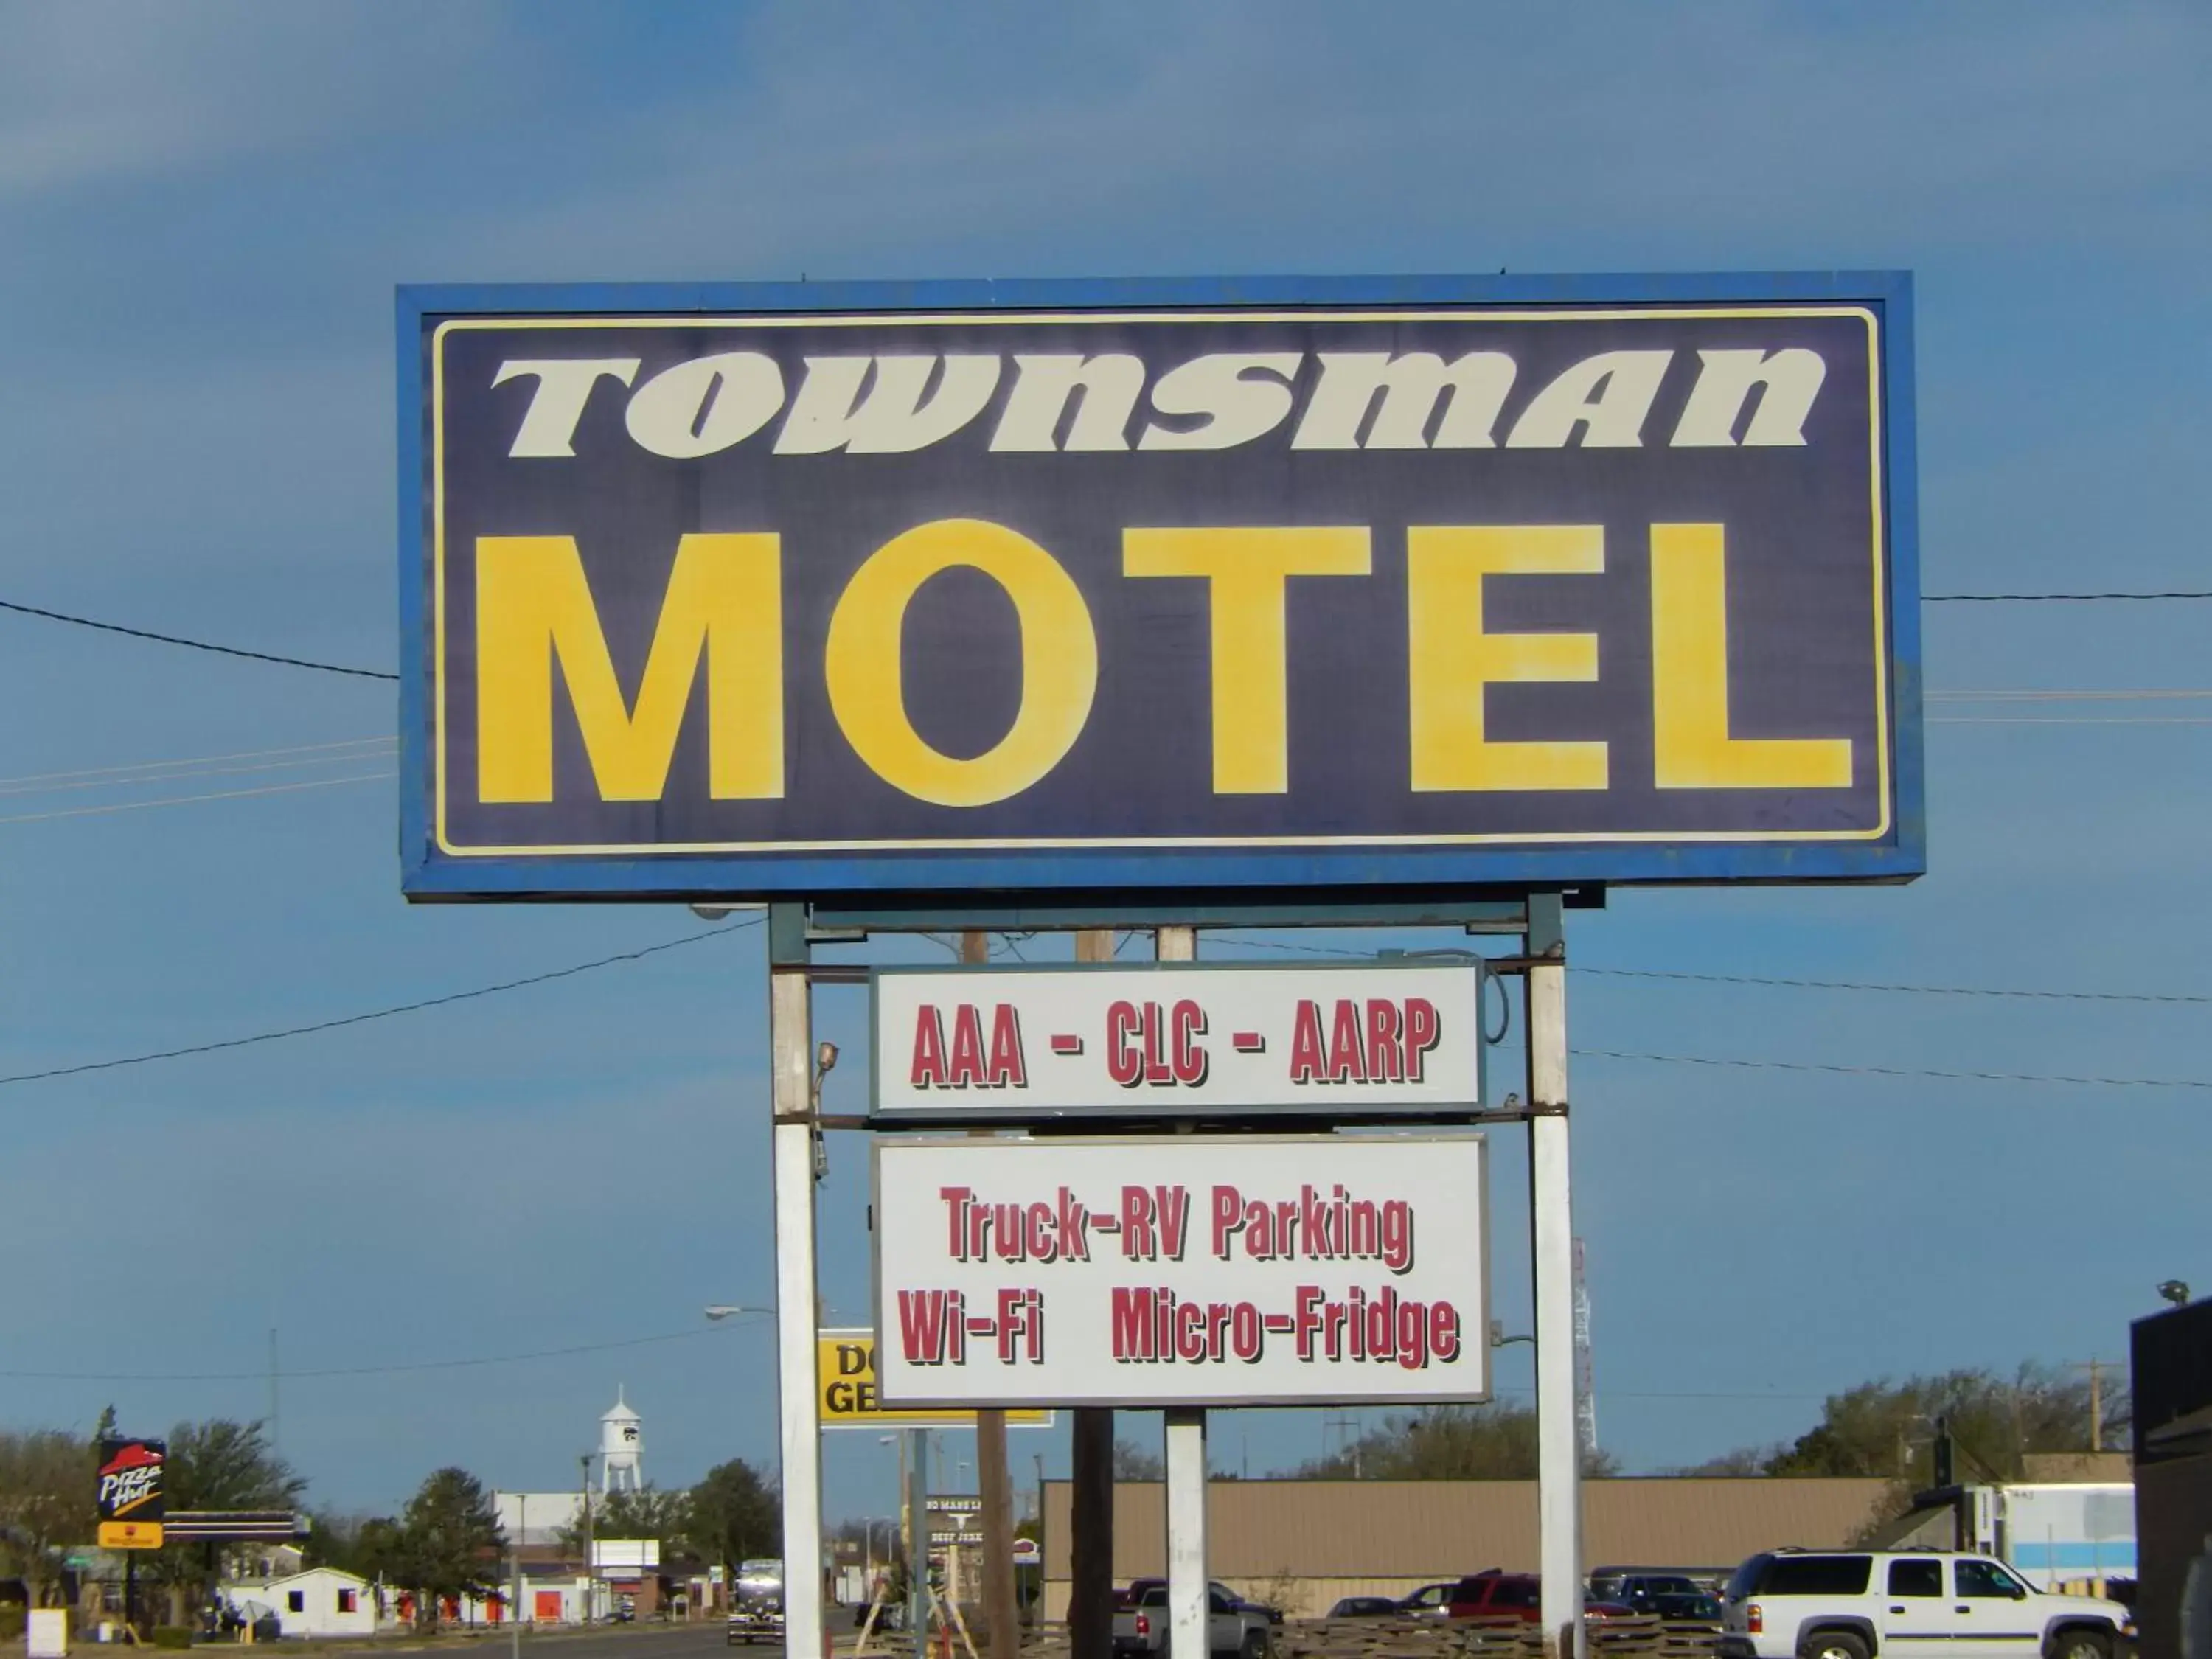 Property logo or sign, Property Logo/Sign in Townsman Motel